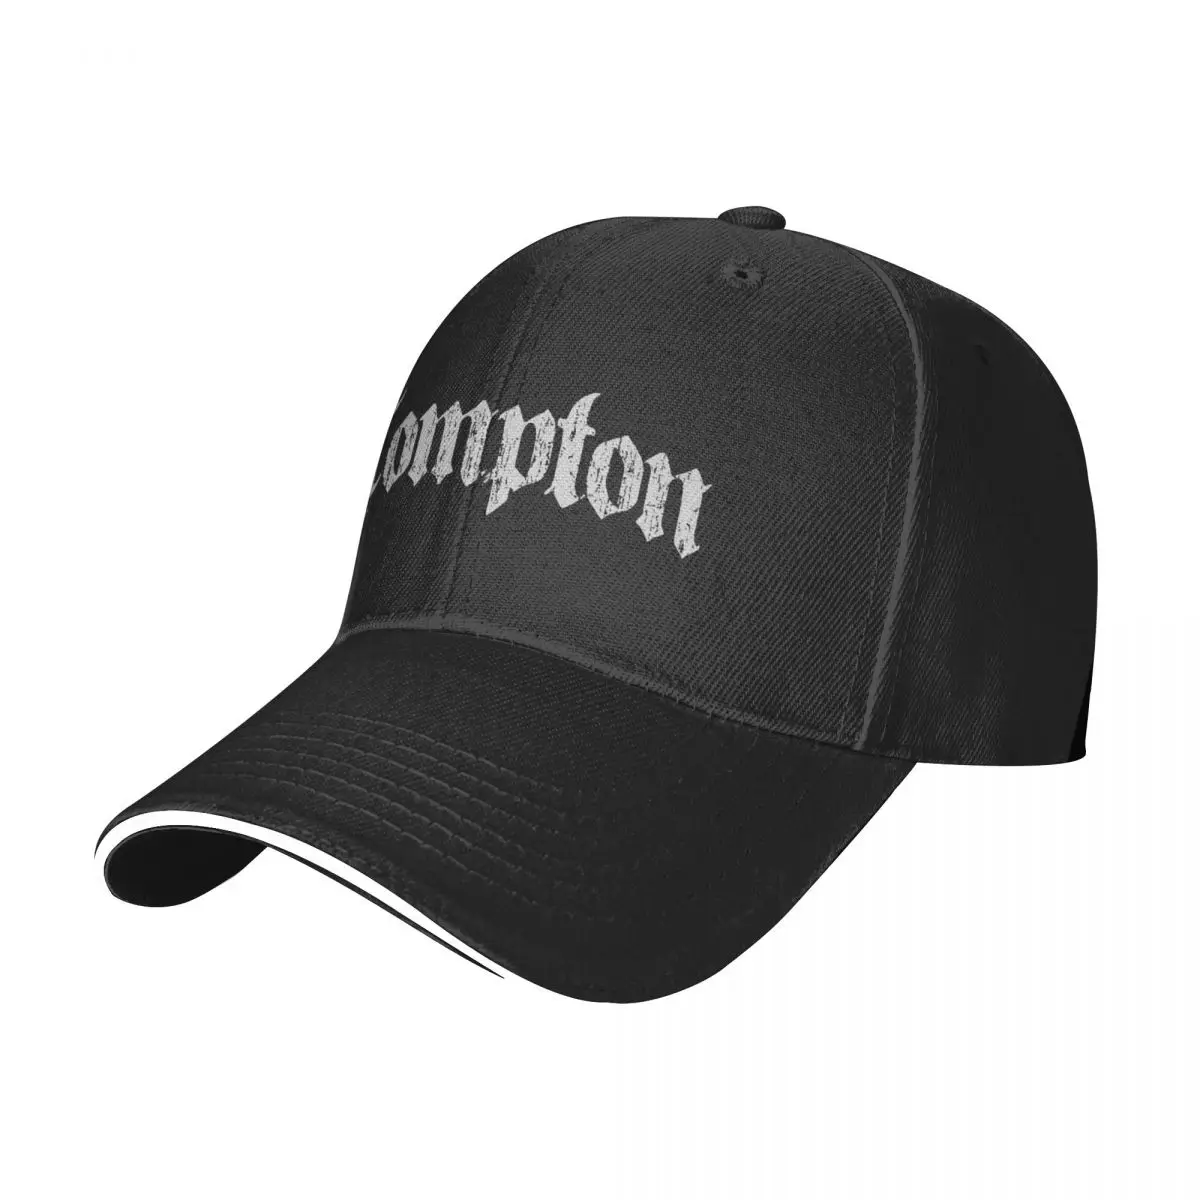 

COMPTON NWA Fashion Baseball Cap Men Women Buckle Back Hat Adjustable Sun Protection Outdoor Sports Fishing Golf